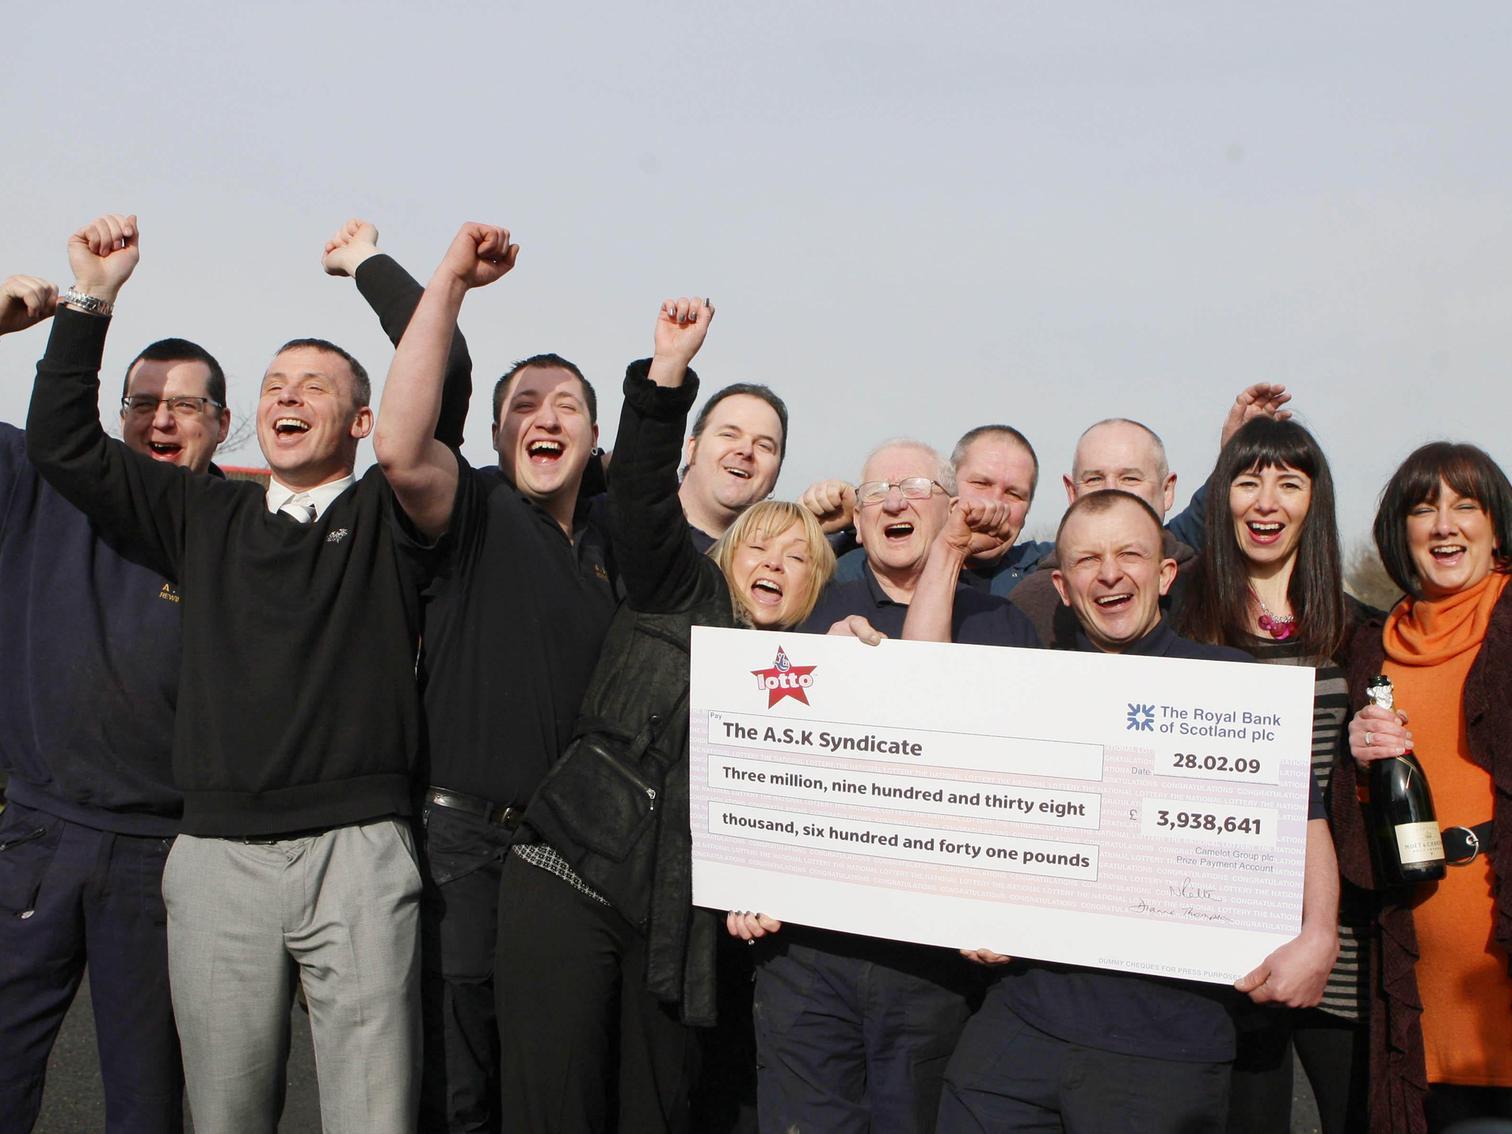 Members of staff from A.S.K. Rewinds Ltd in Accrington celebrate winning 3,938,641 in March 2009